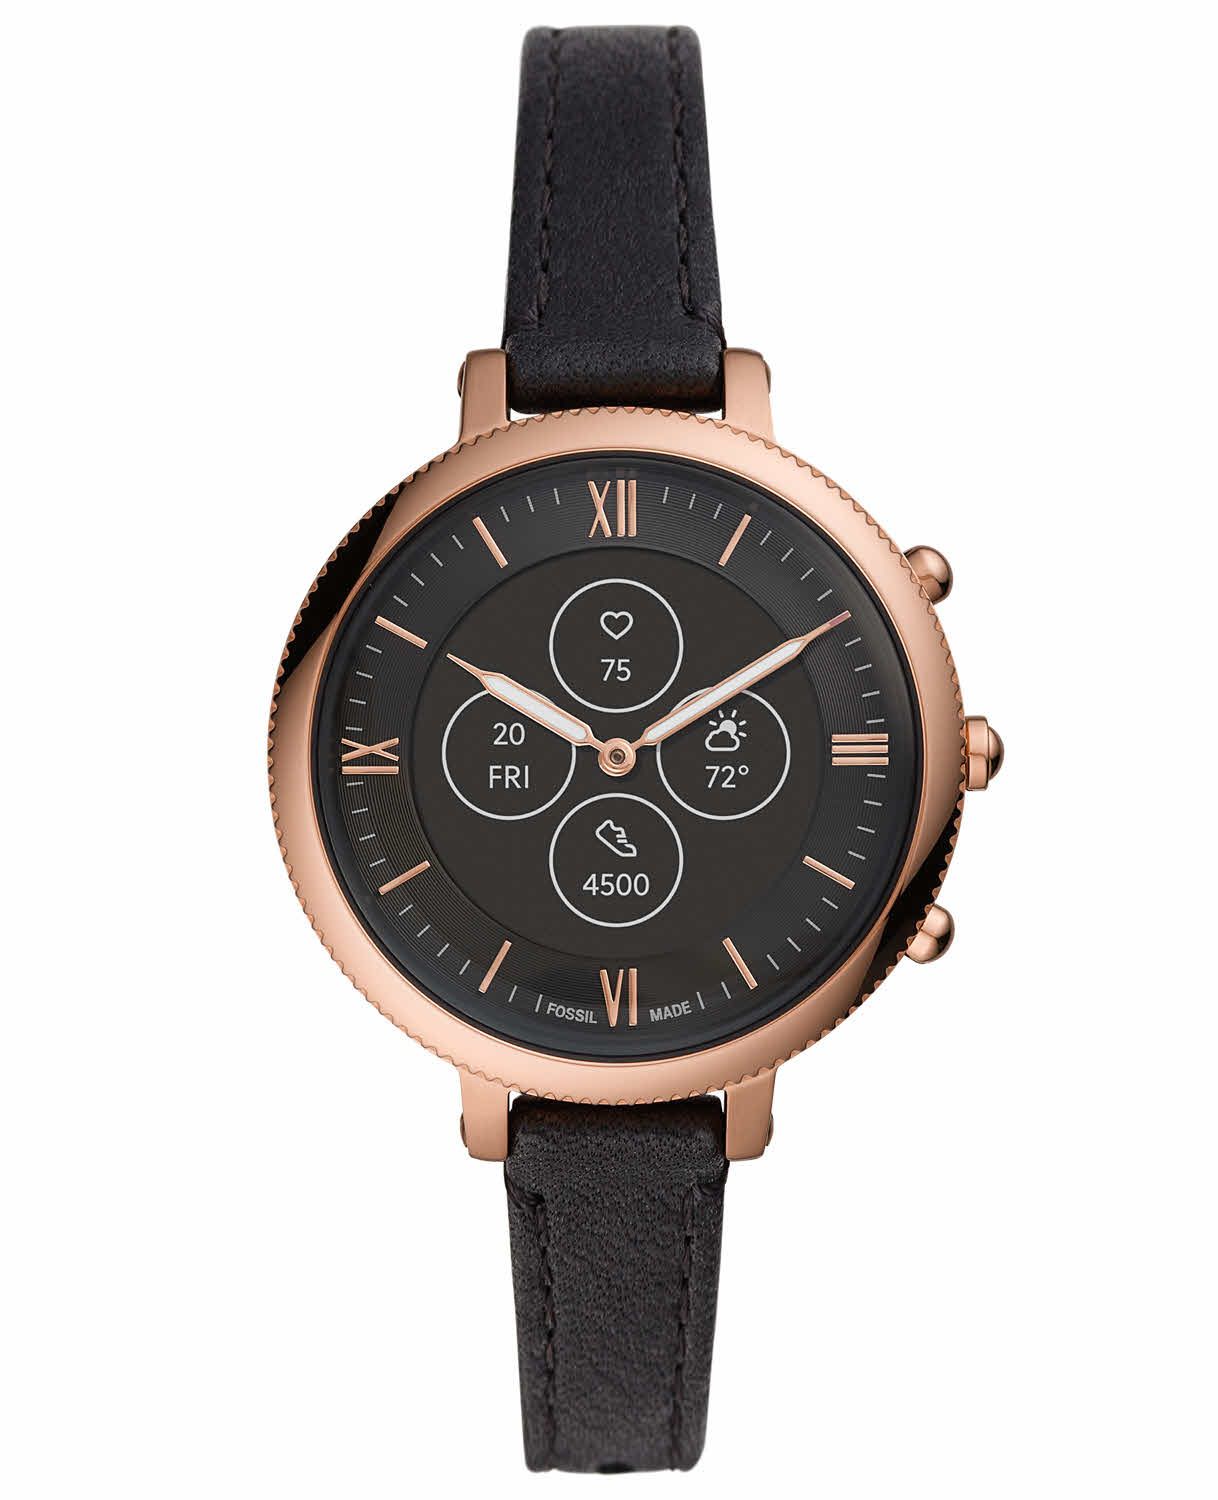 Fossil Hybrid Smartwatch HR Monroe Black Leather FTW7035